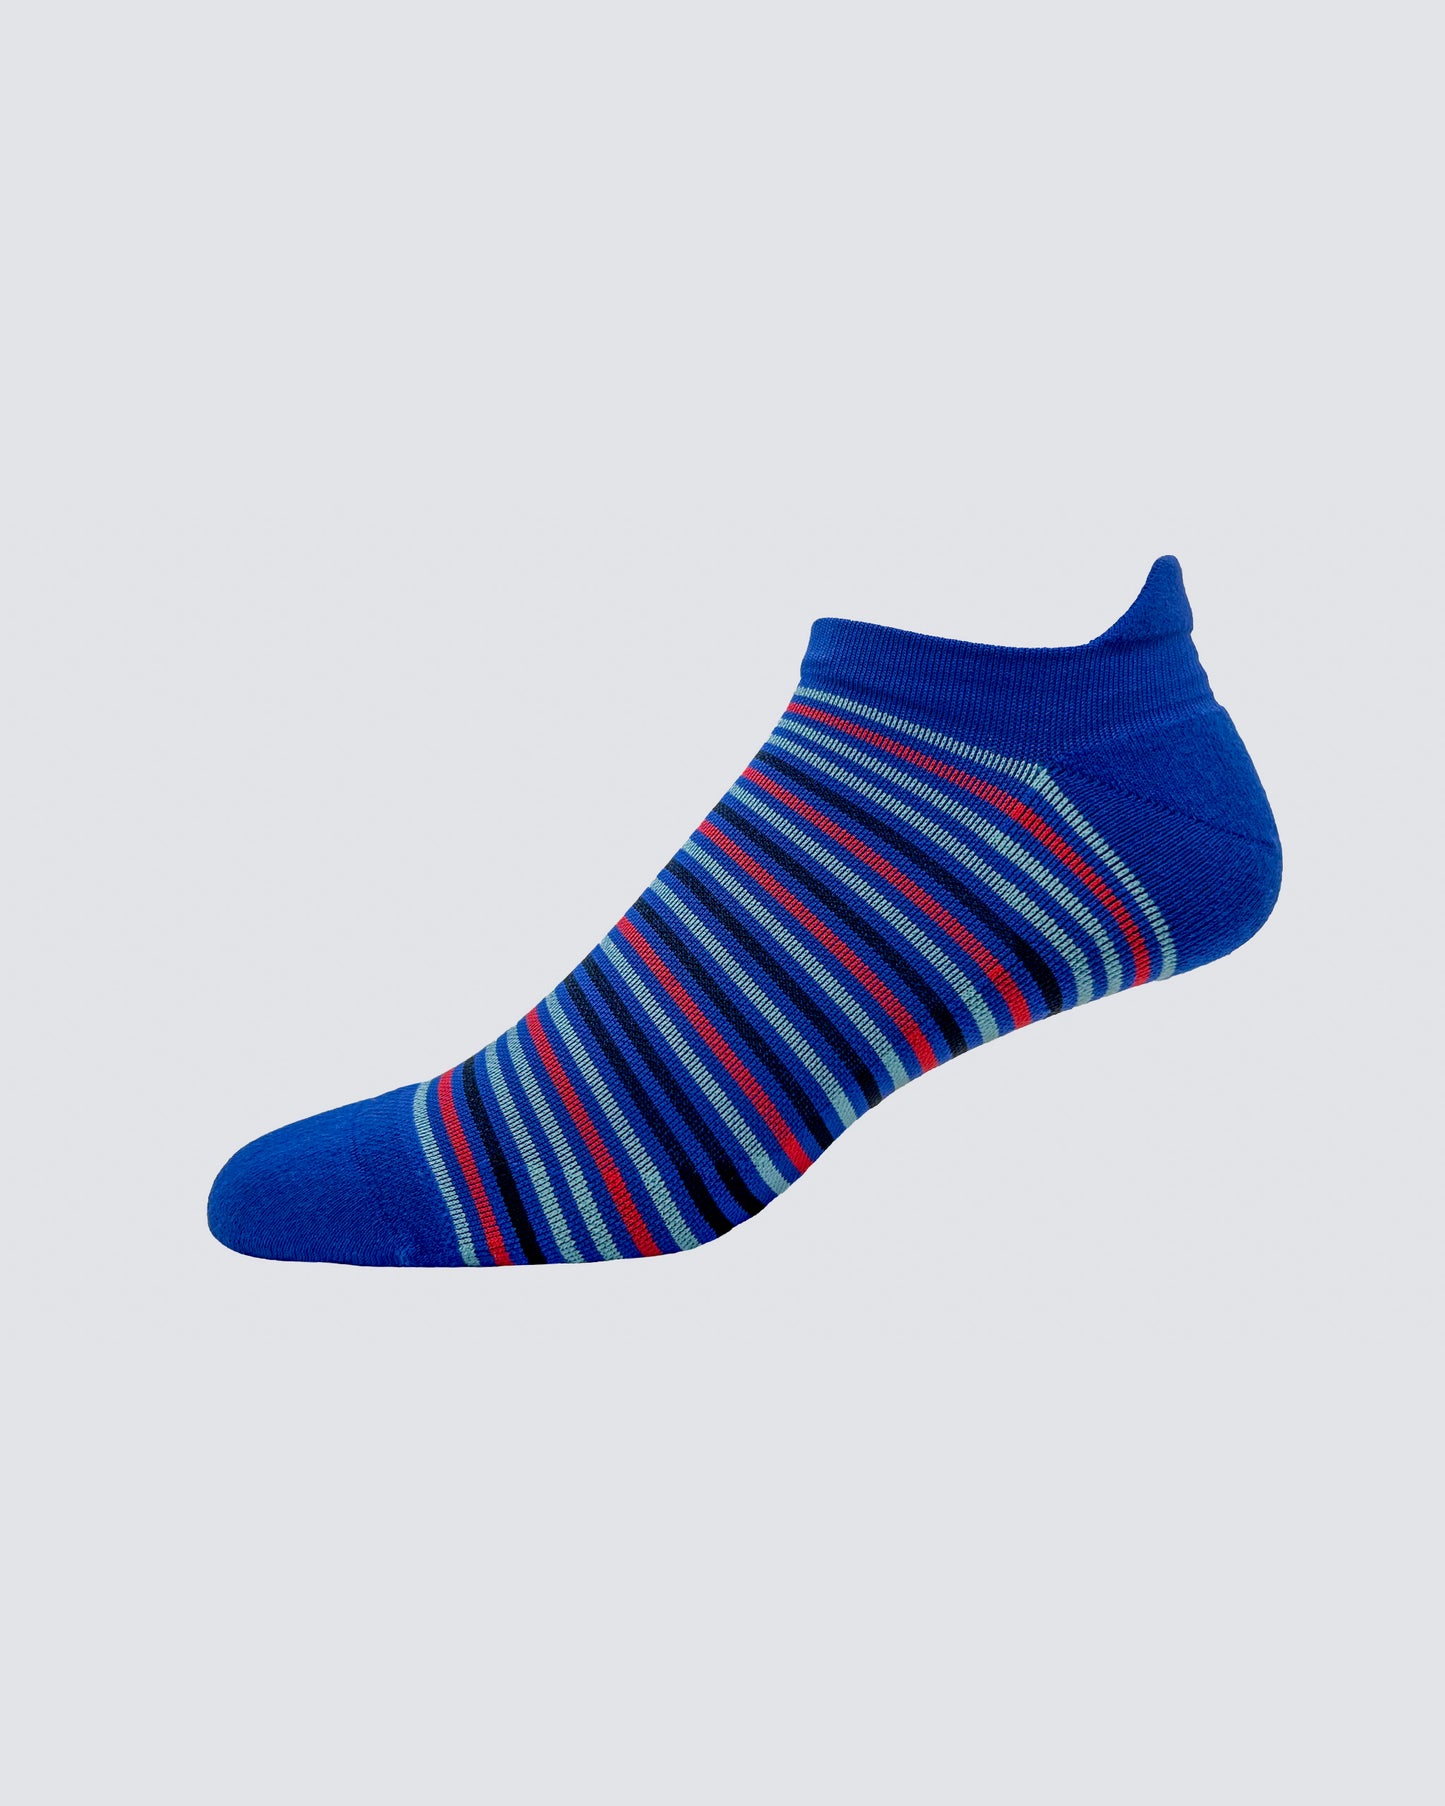 Dudley Stripe Socks in Olympic